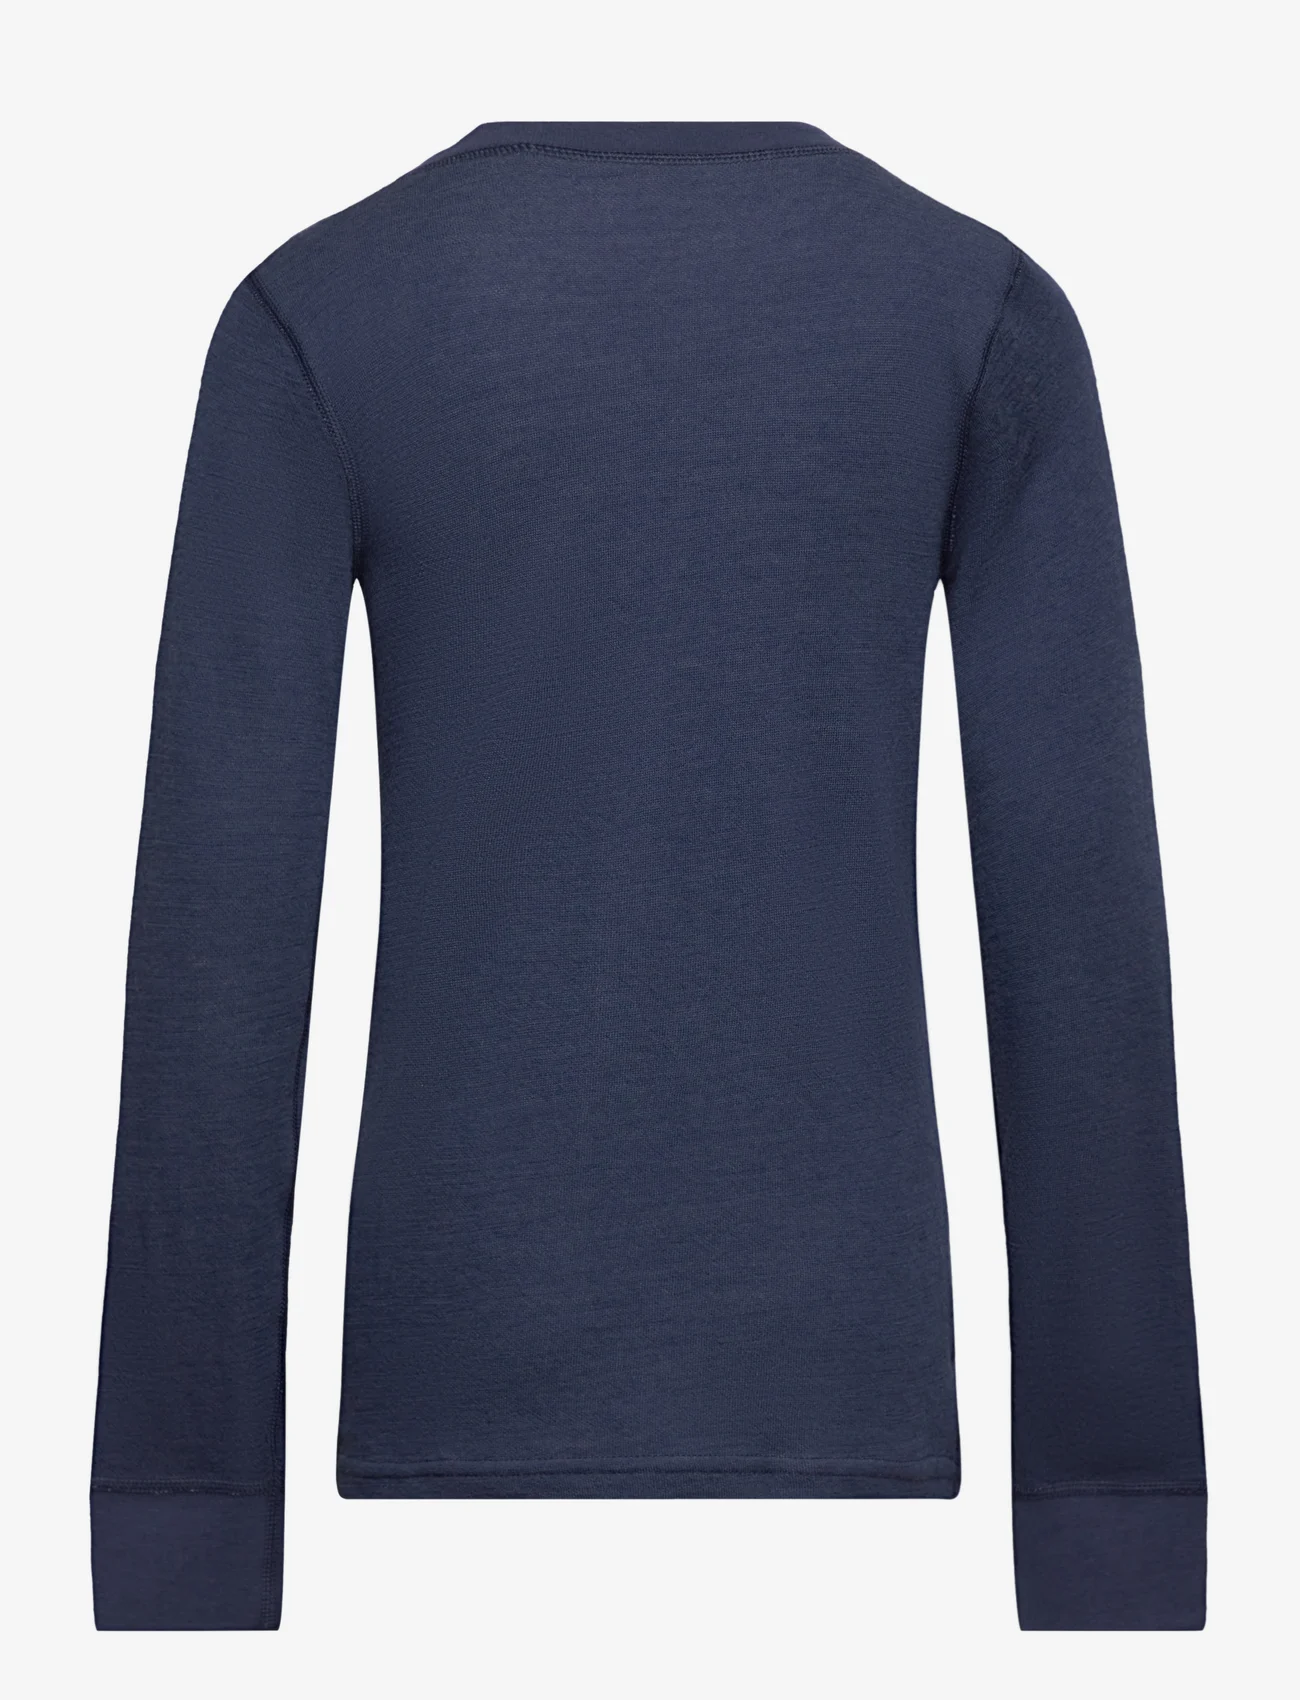 CeLaVi - Blouse LS, w. print - langærmede t-shirts - dark blue - 1